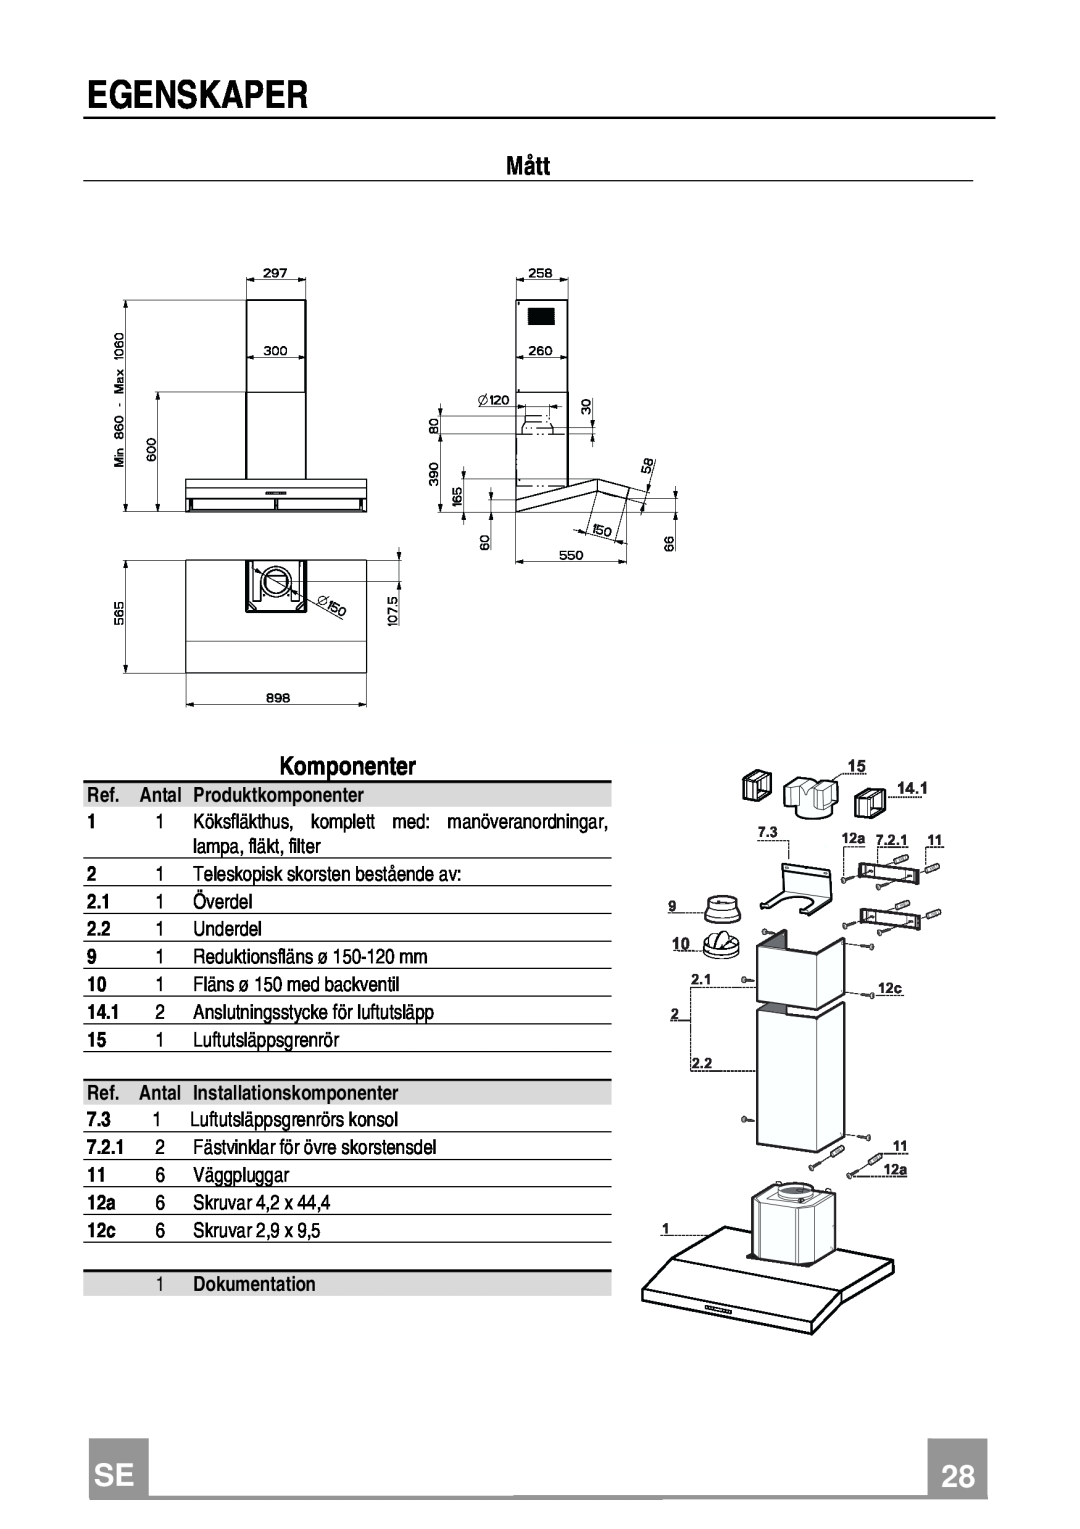 Franke Consumer Products FCH 906 XS ECS manual Egenskaper, Komponenter, Ref. Antal Produktkomponenter 